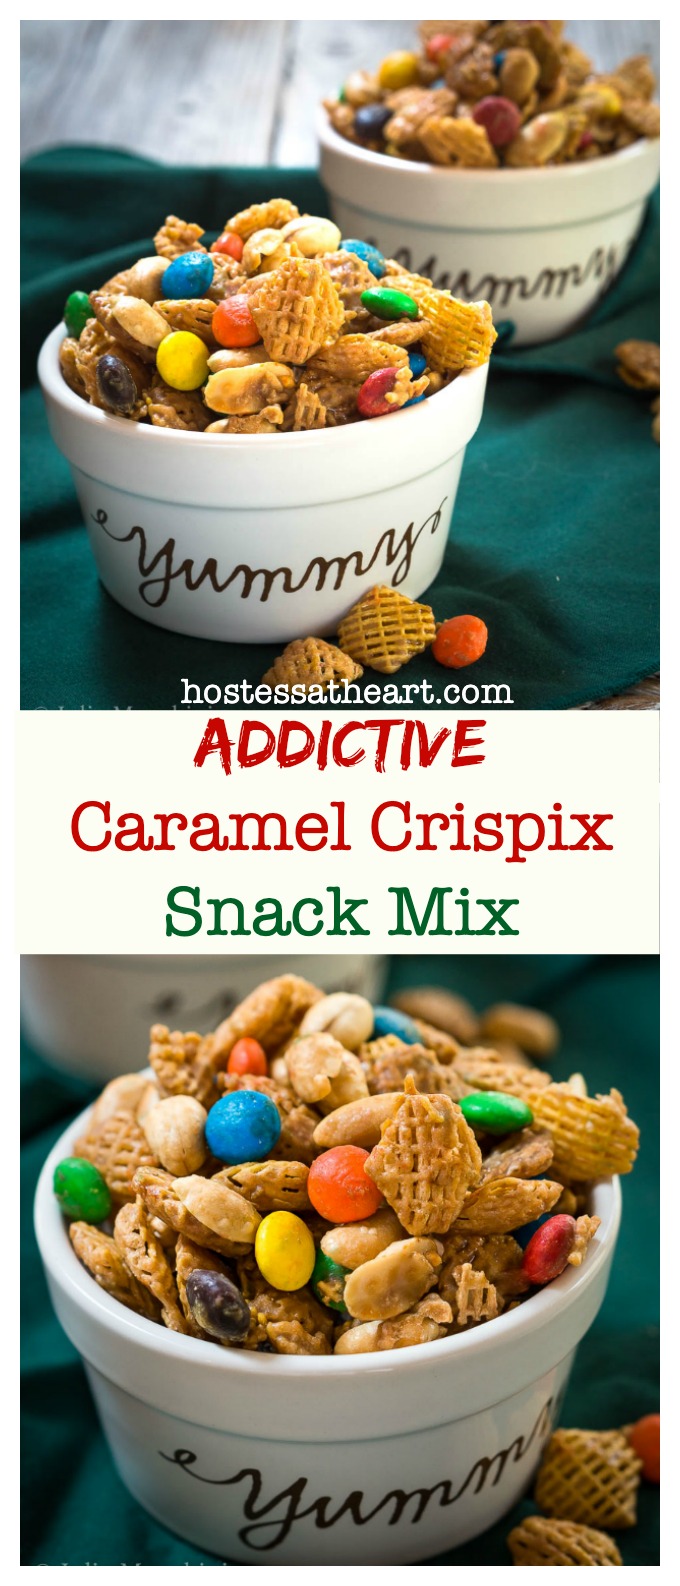 Caramel Crispix Snack Mix - Sweet & Salty Recipe - Hostess At Heart